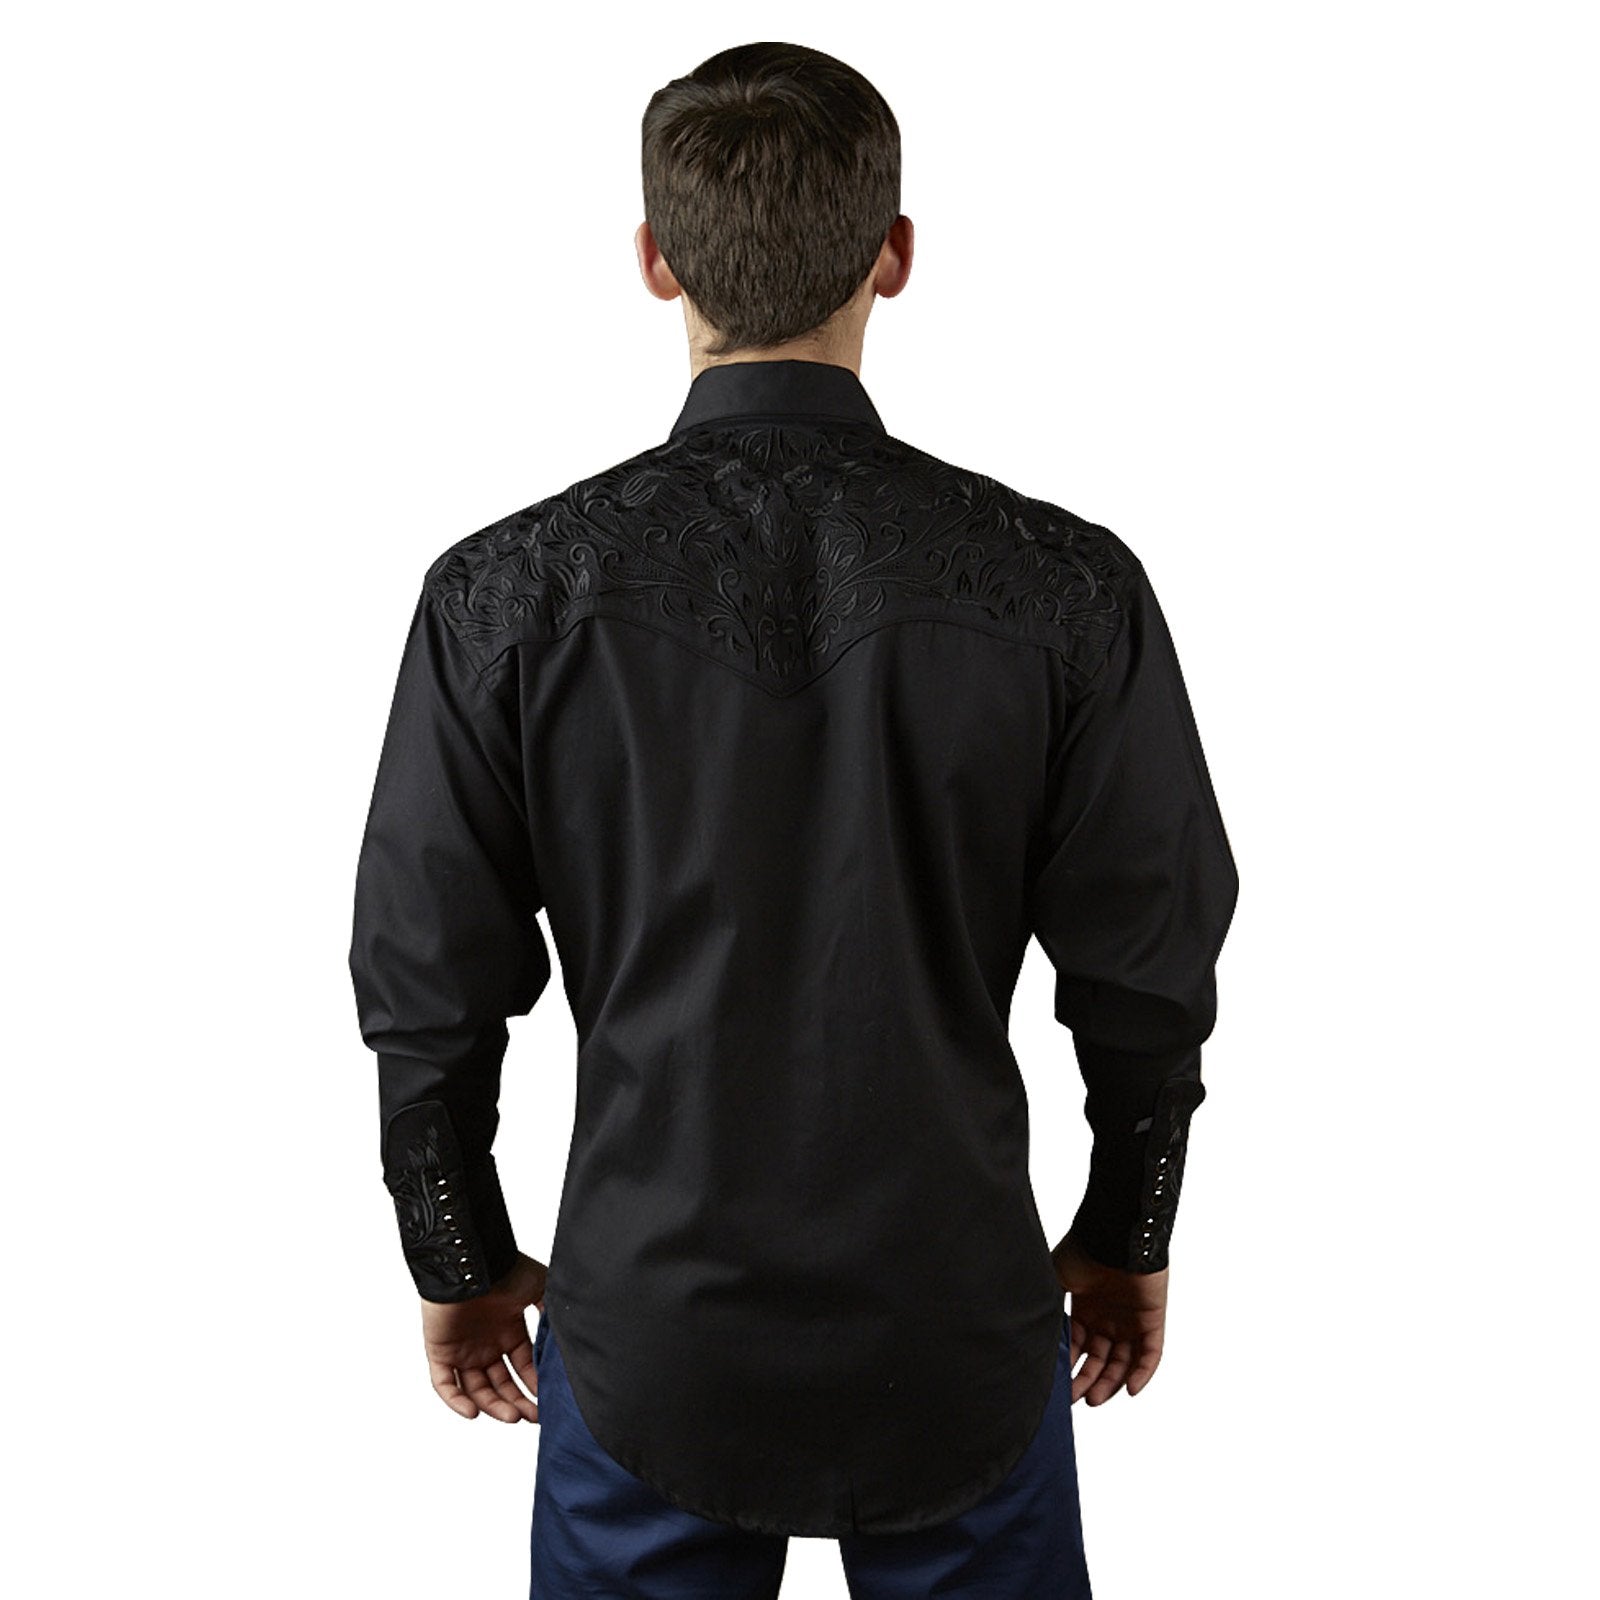 Rockmount Ranch Wear Men's Vintage Western Shirt Floral Embroidery Black Front